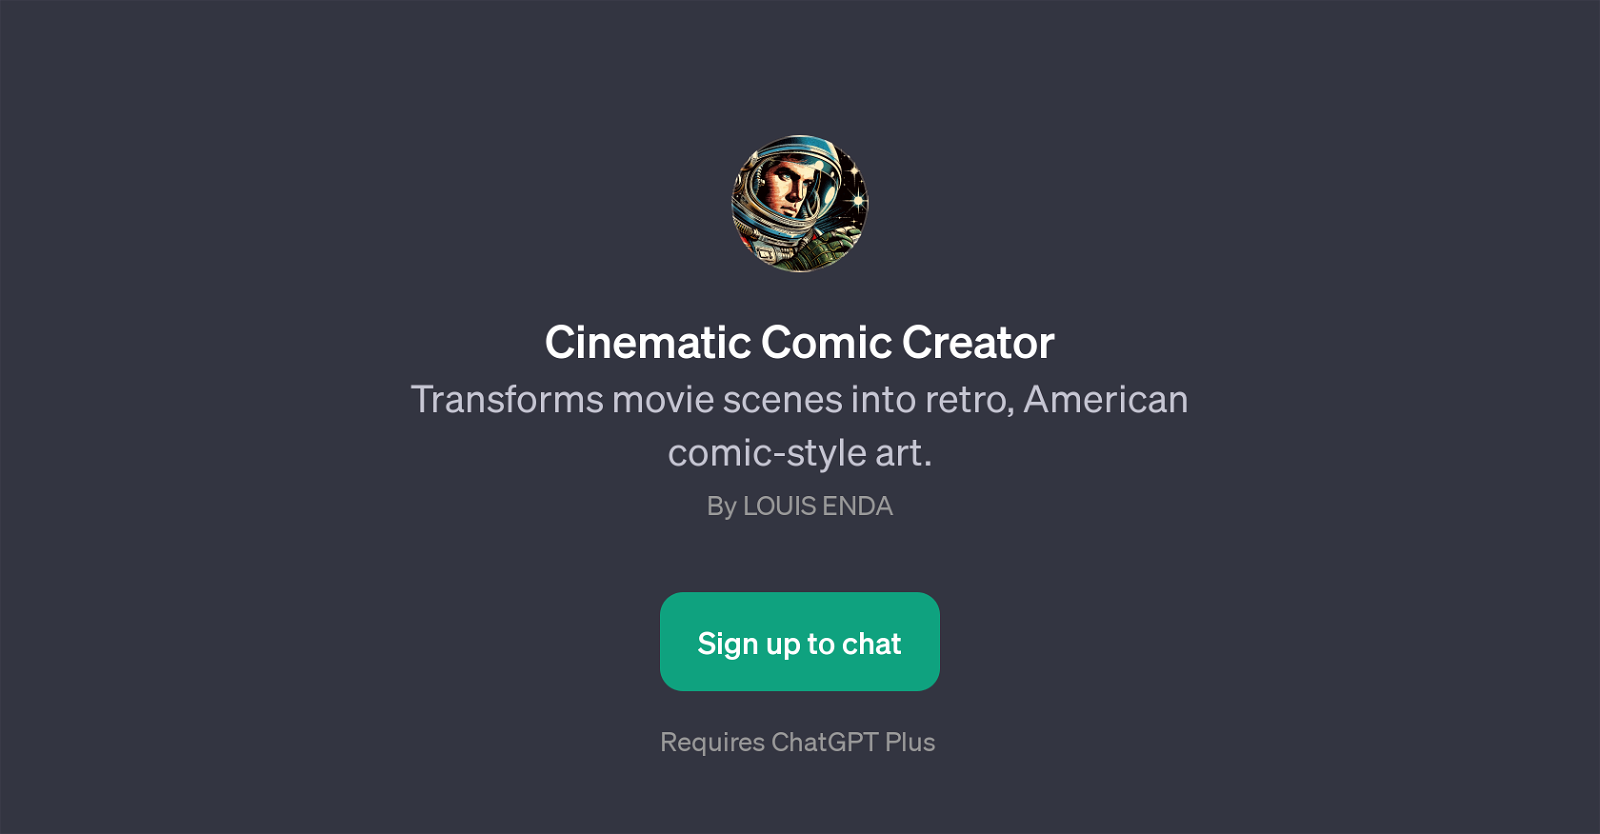 Cinematic Comic Creator website